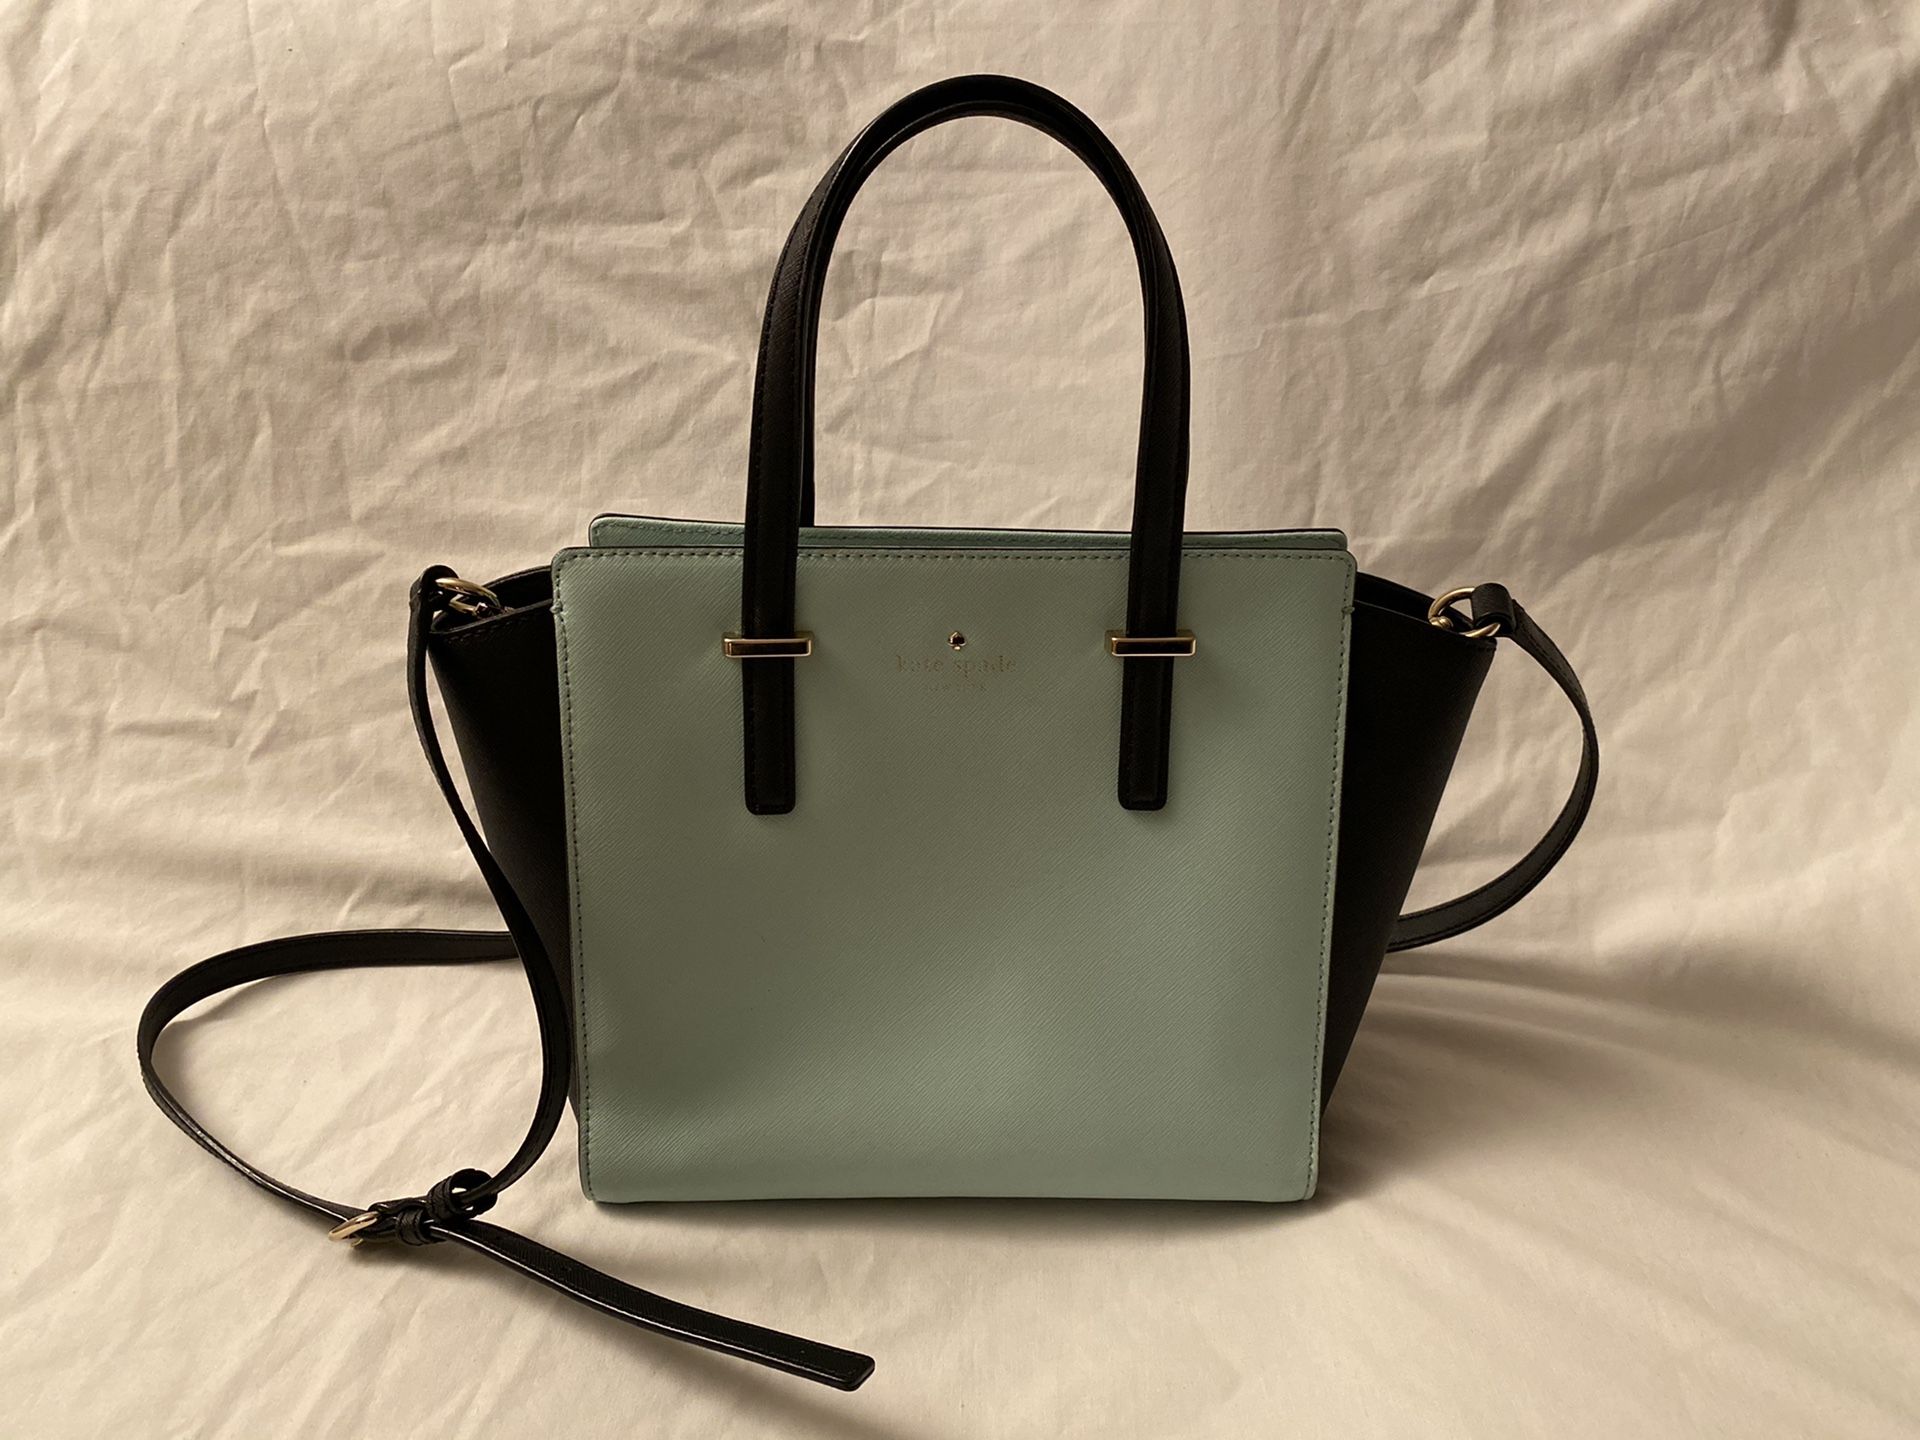 Beautiful Kate Spade Cedar Street tiffany-blue and black medium satchel purse hand bag cross-body like new